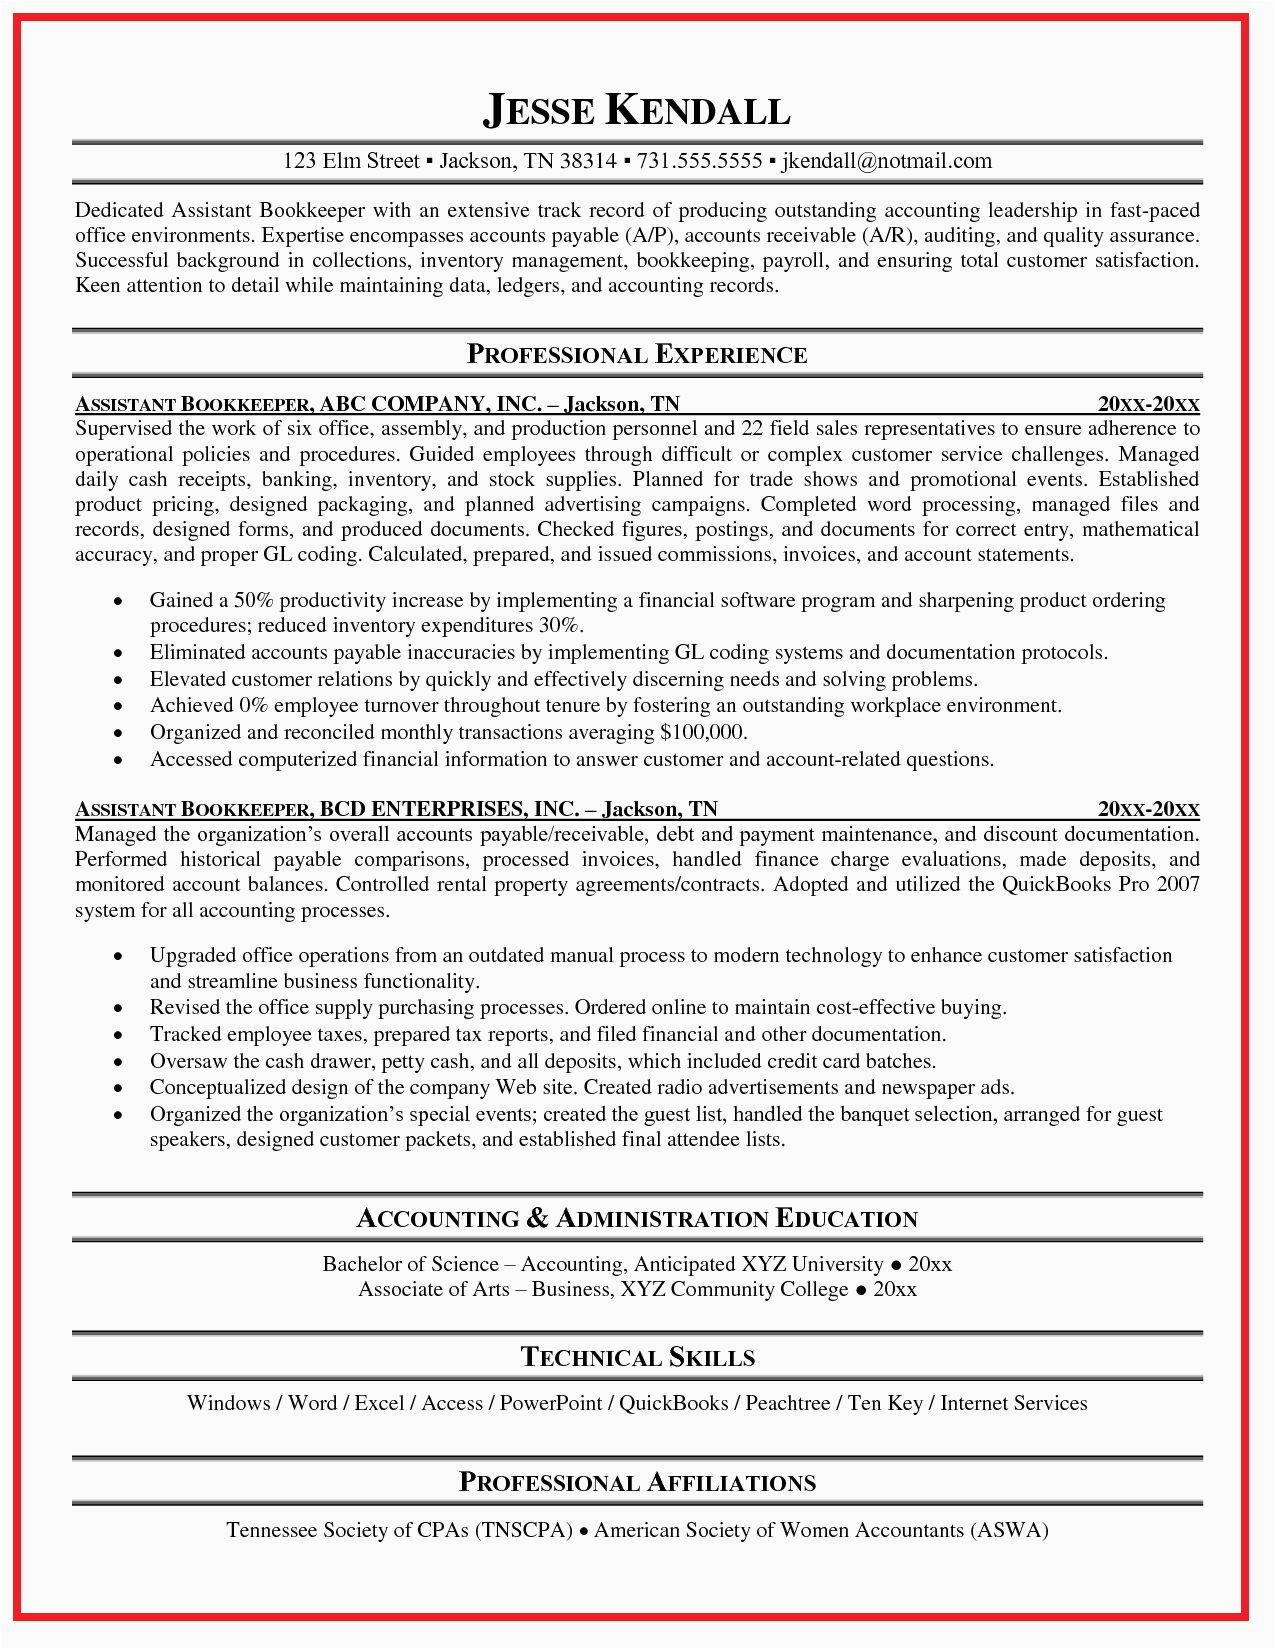 Sample Resume for Entry Level Bookkeeper Entry Level Bookkeeper Resume Sample Best Resume Examples